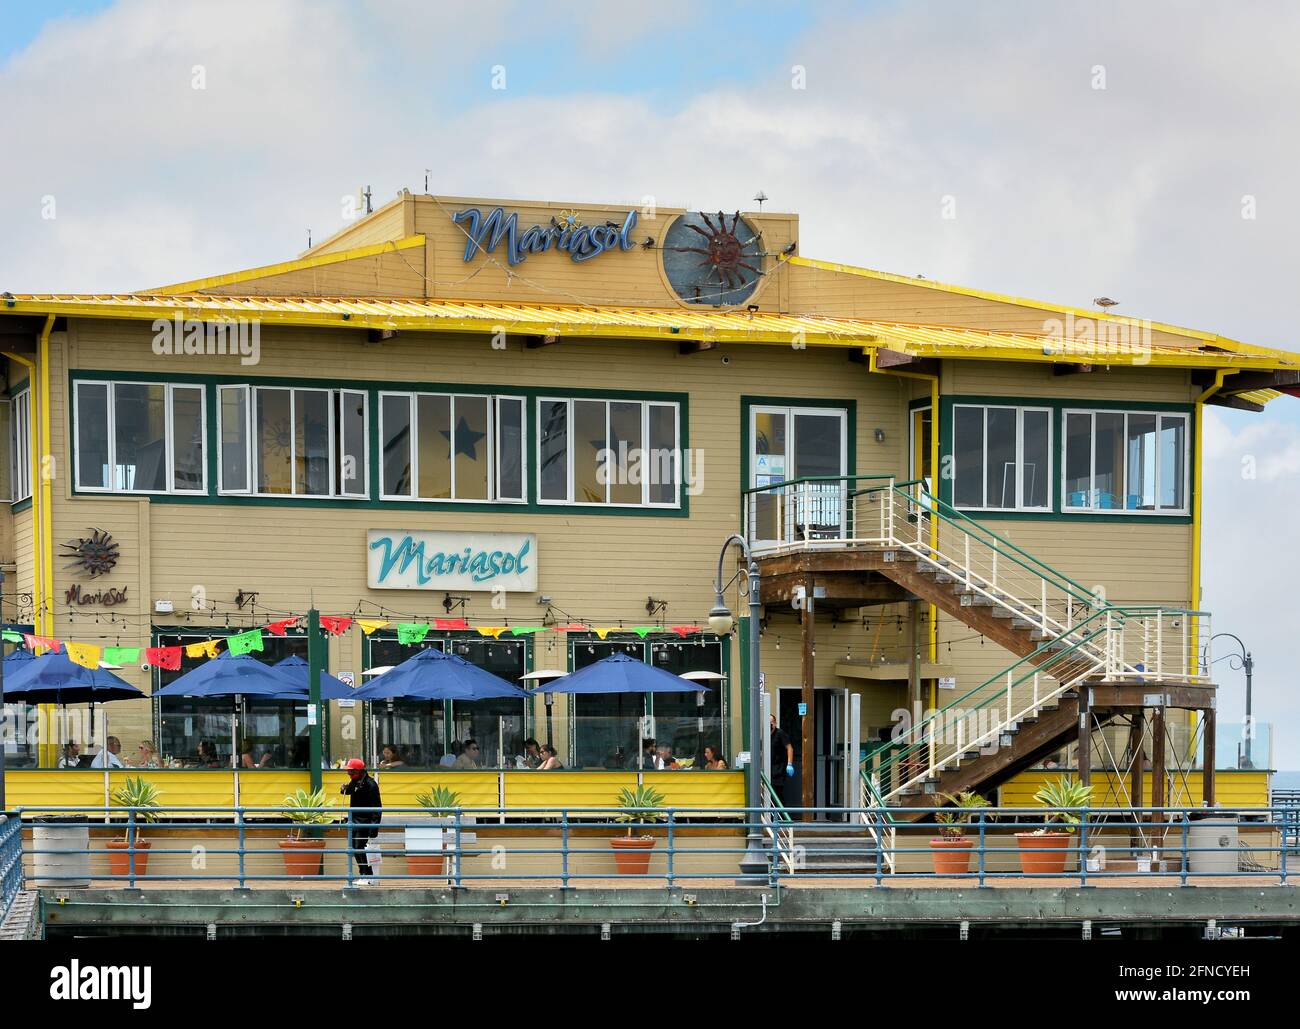 SANTA MONICA, KALIFORNIEN - 15. MAI 2021: Mariasol Mexican Restaurant am Santa Monica Pier. Stockfoto